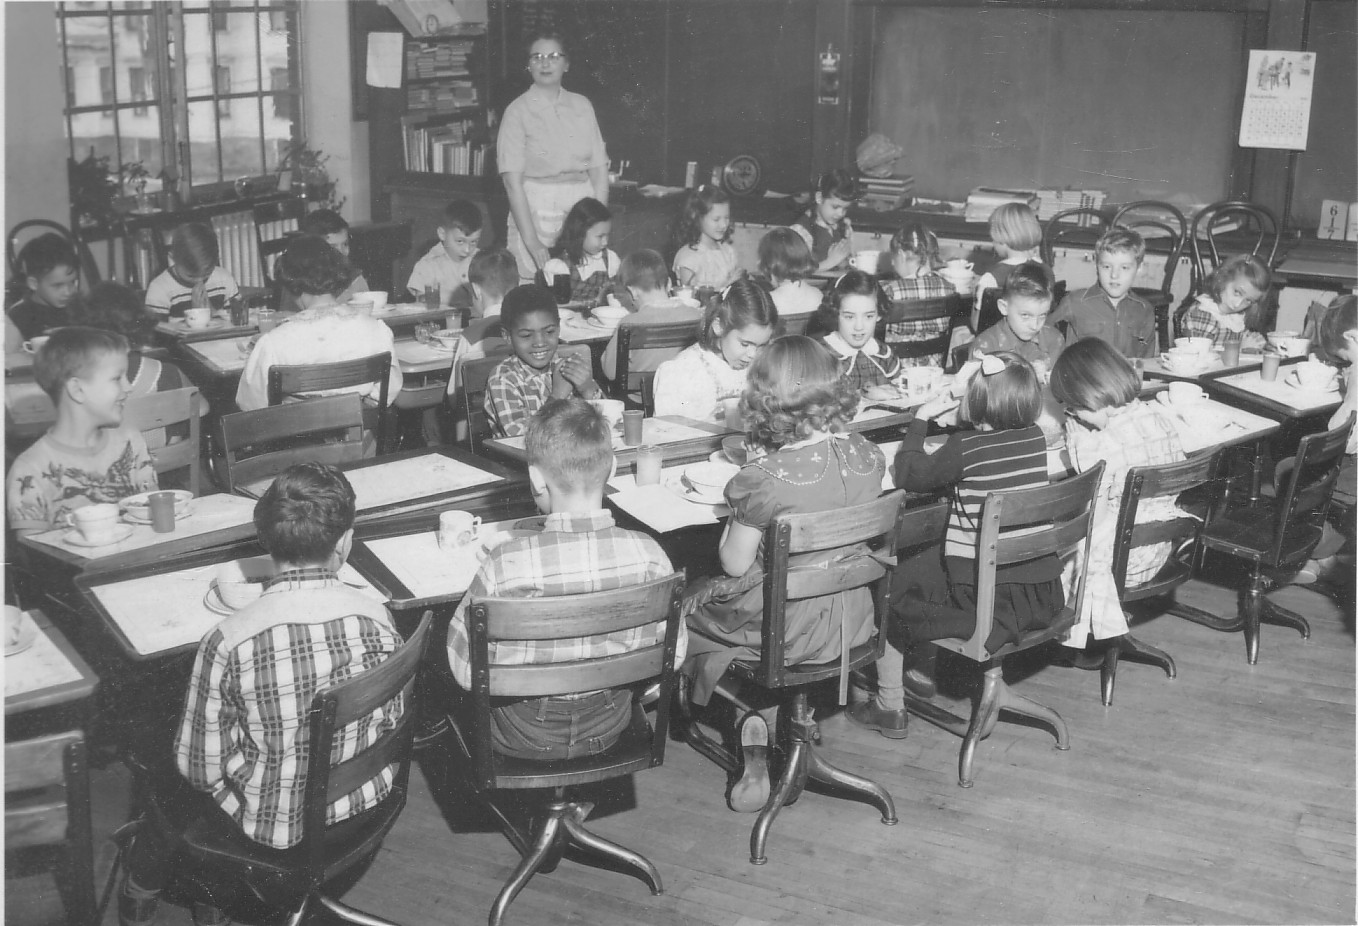 Mrs. Duffany's 3rd grade class having breakfast together, Henry St. John's Elementary School, December 13, 1951